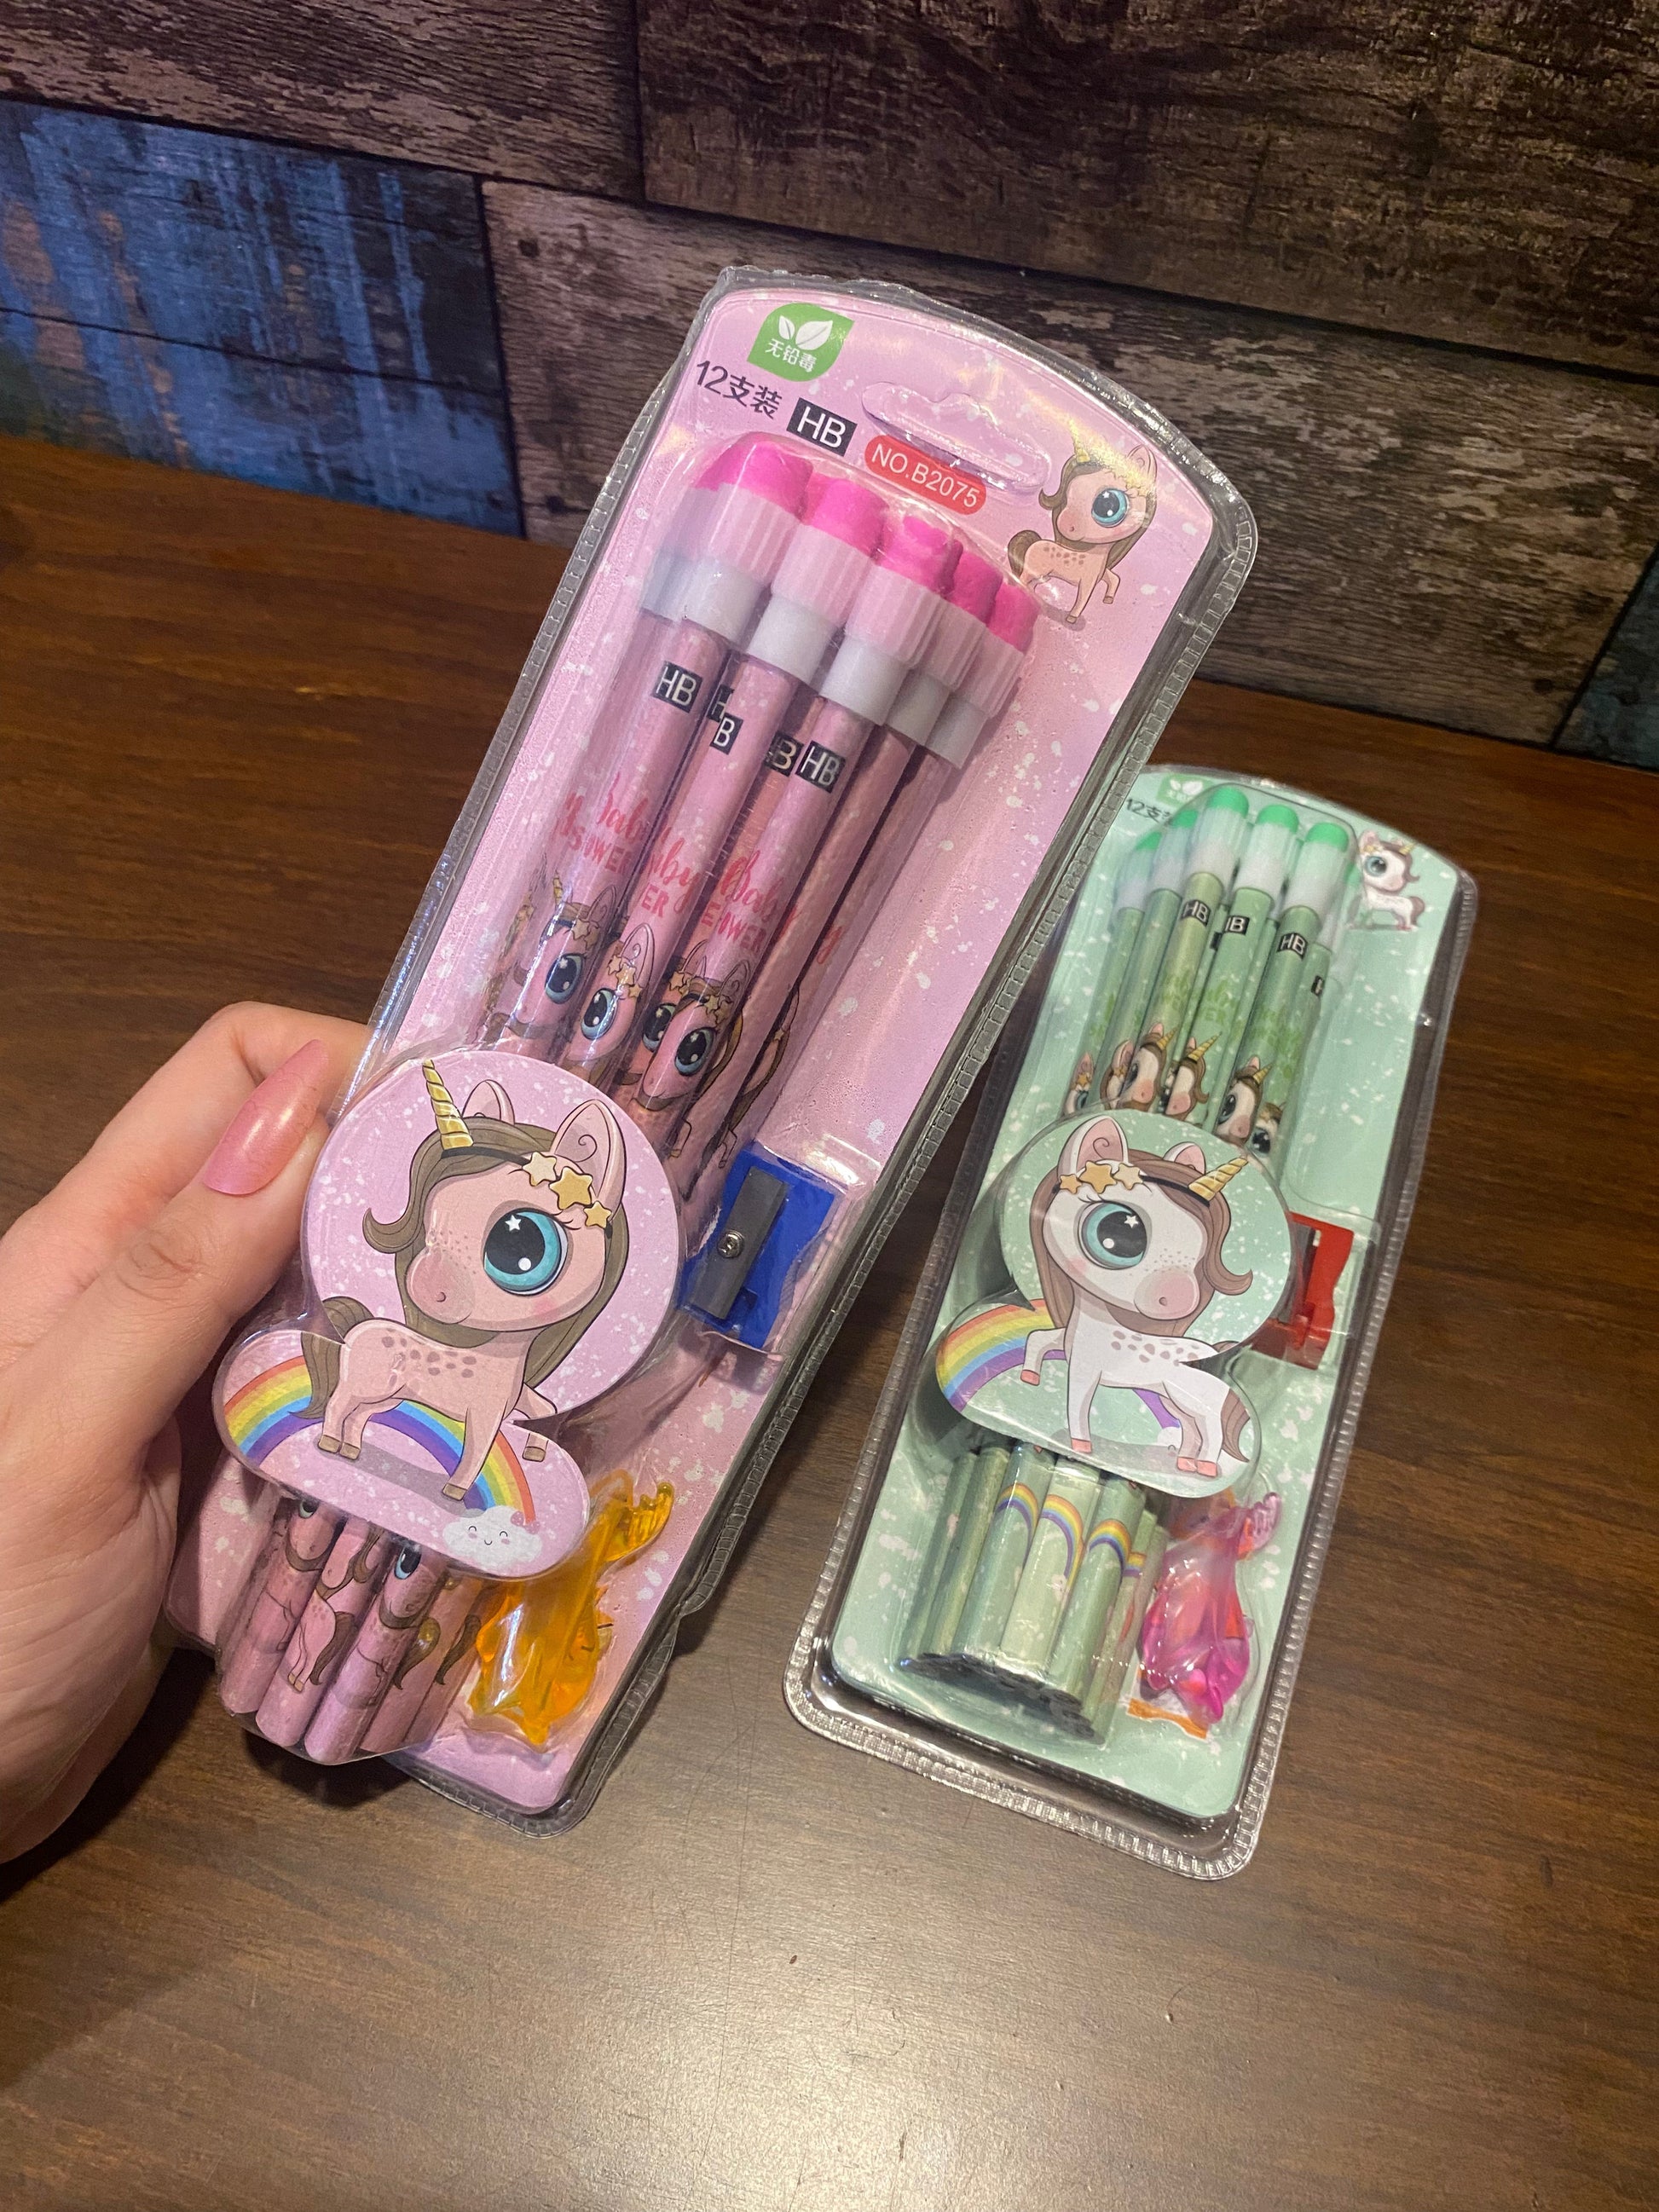 Unicorn Pencils Set